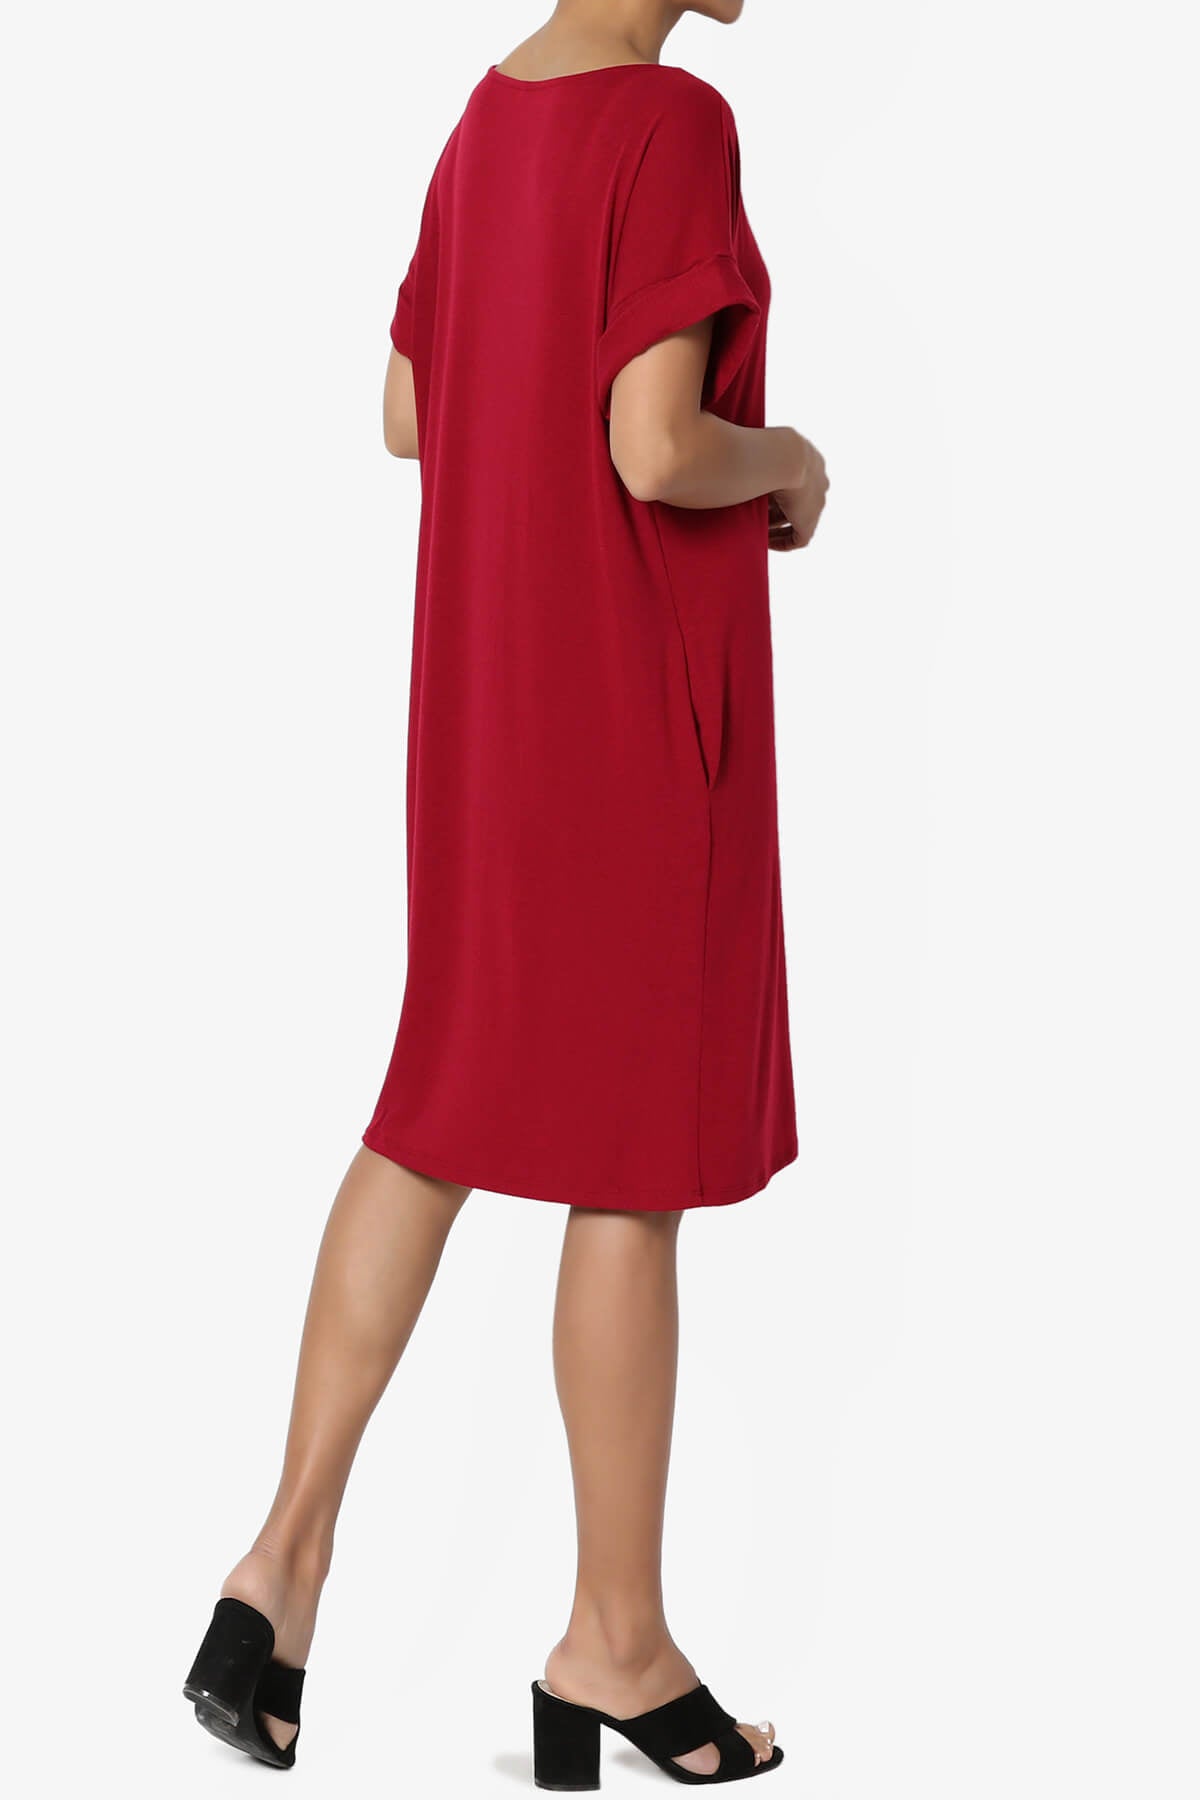 Load image into Gallery viewer, Janie Rolled Short Sleeve Round Neck Dress DARK RED_4
